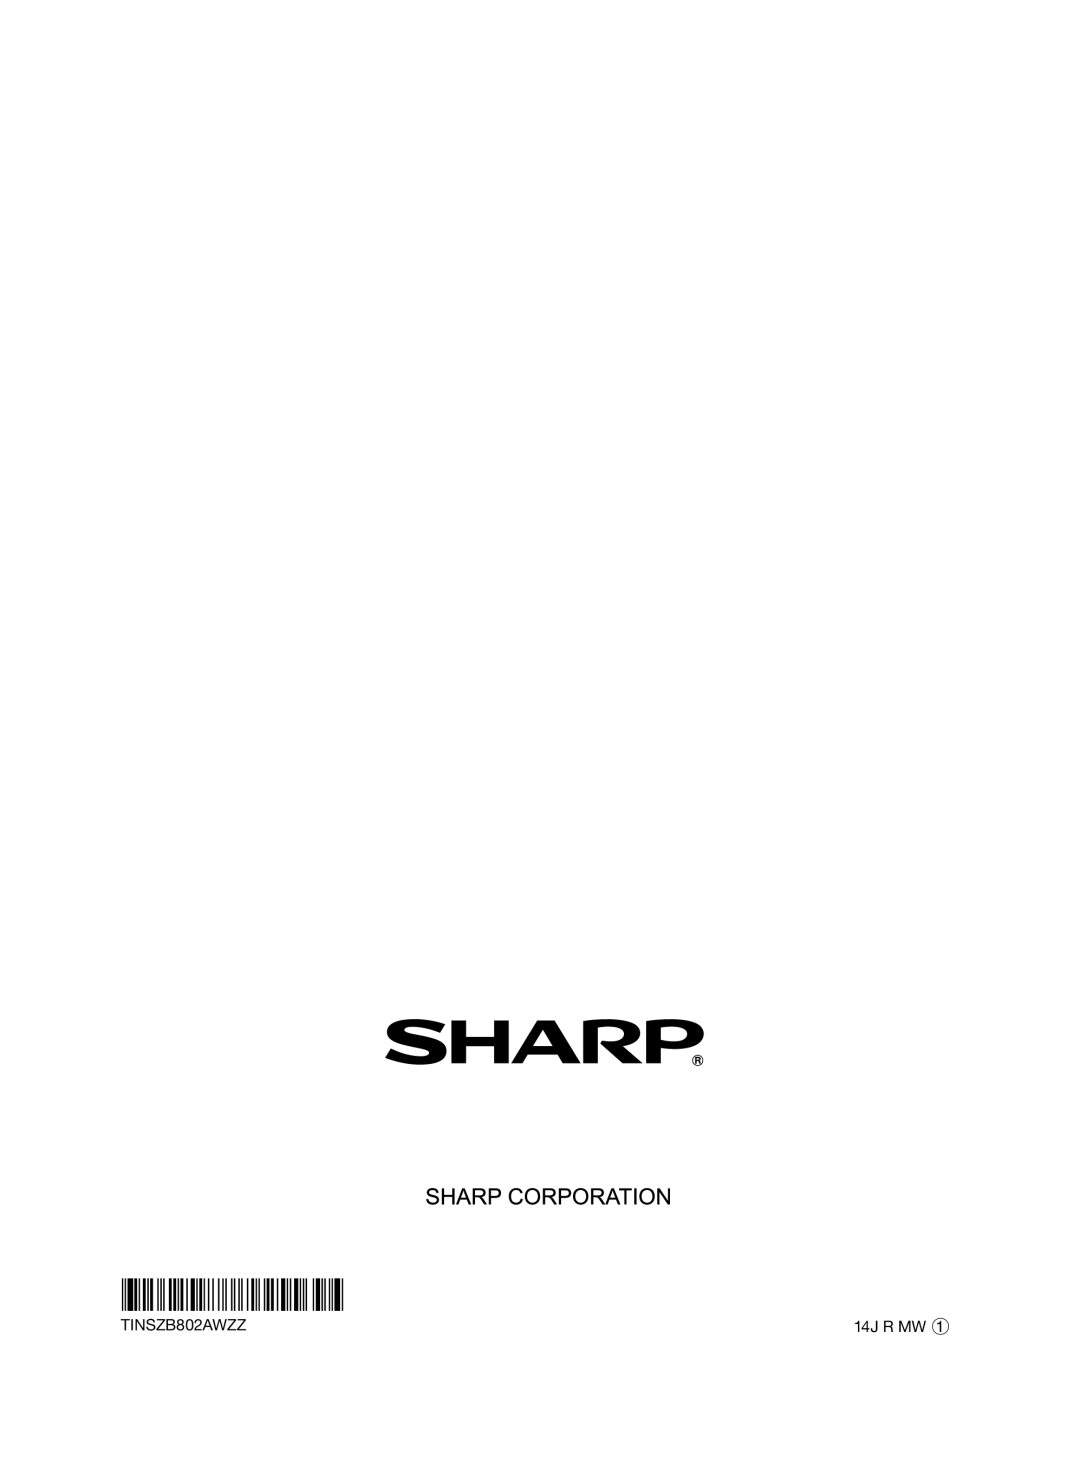 Sharp XL-DAB102DH operation manual TINSZB802AWZZ3, 14J R MW 